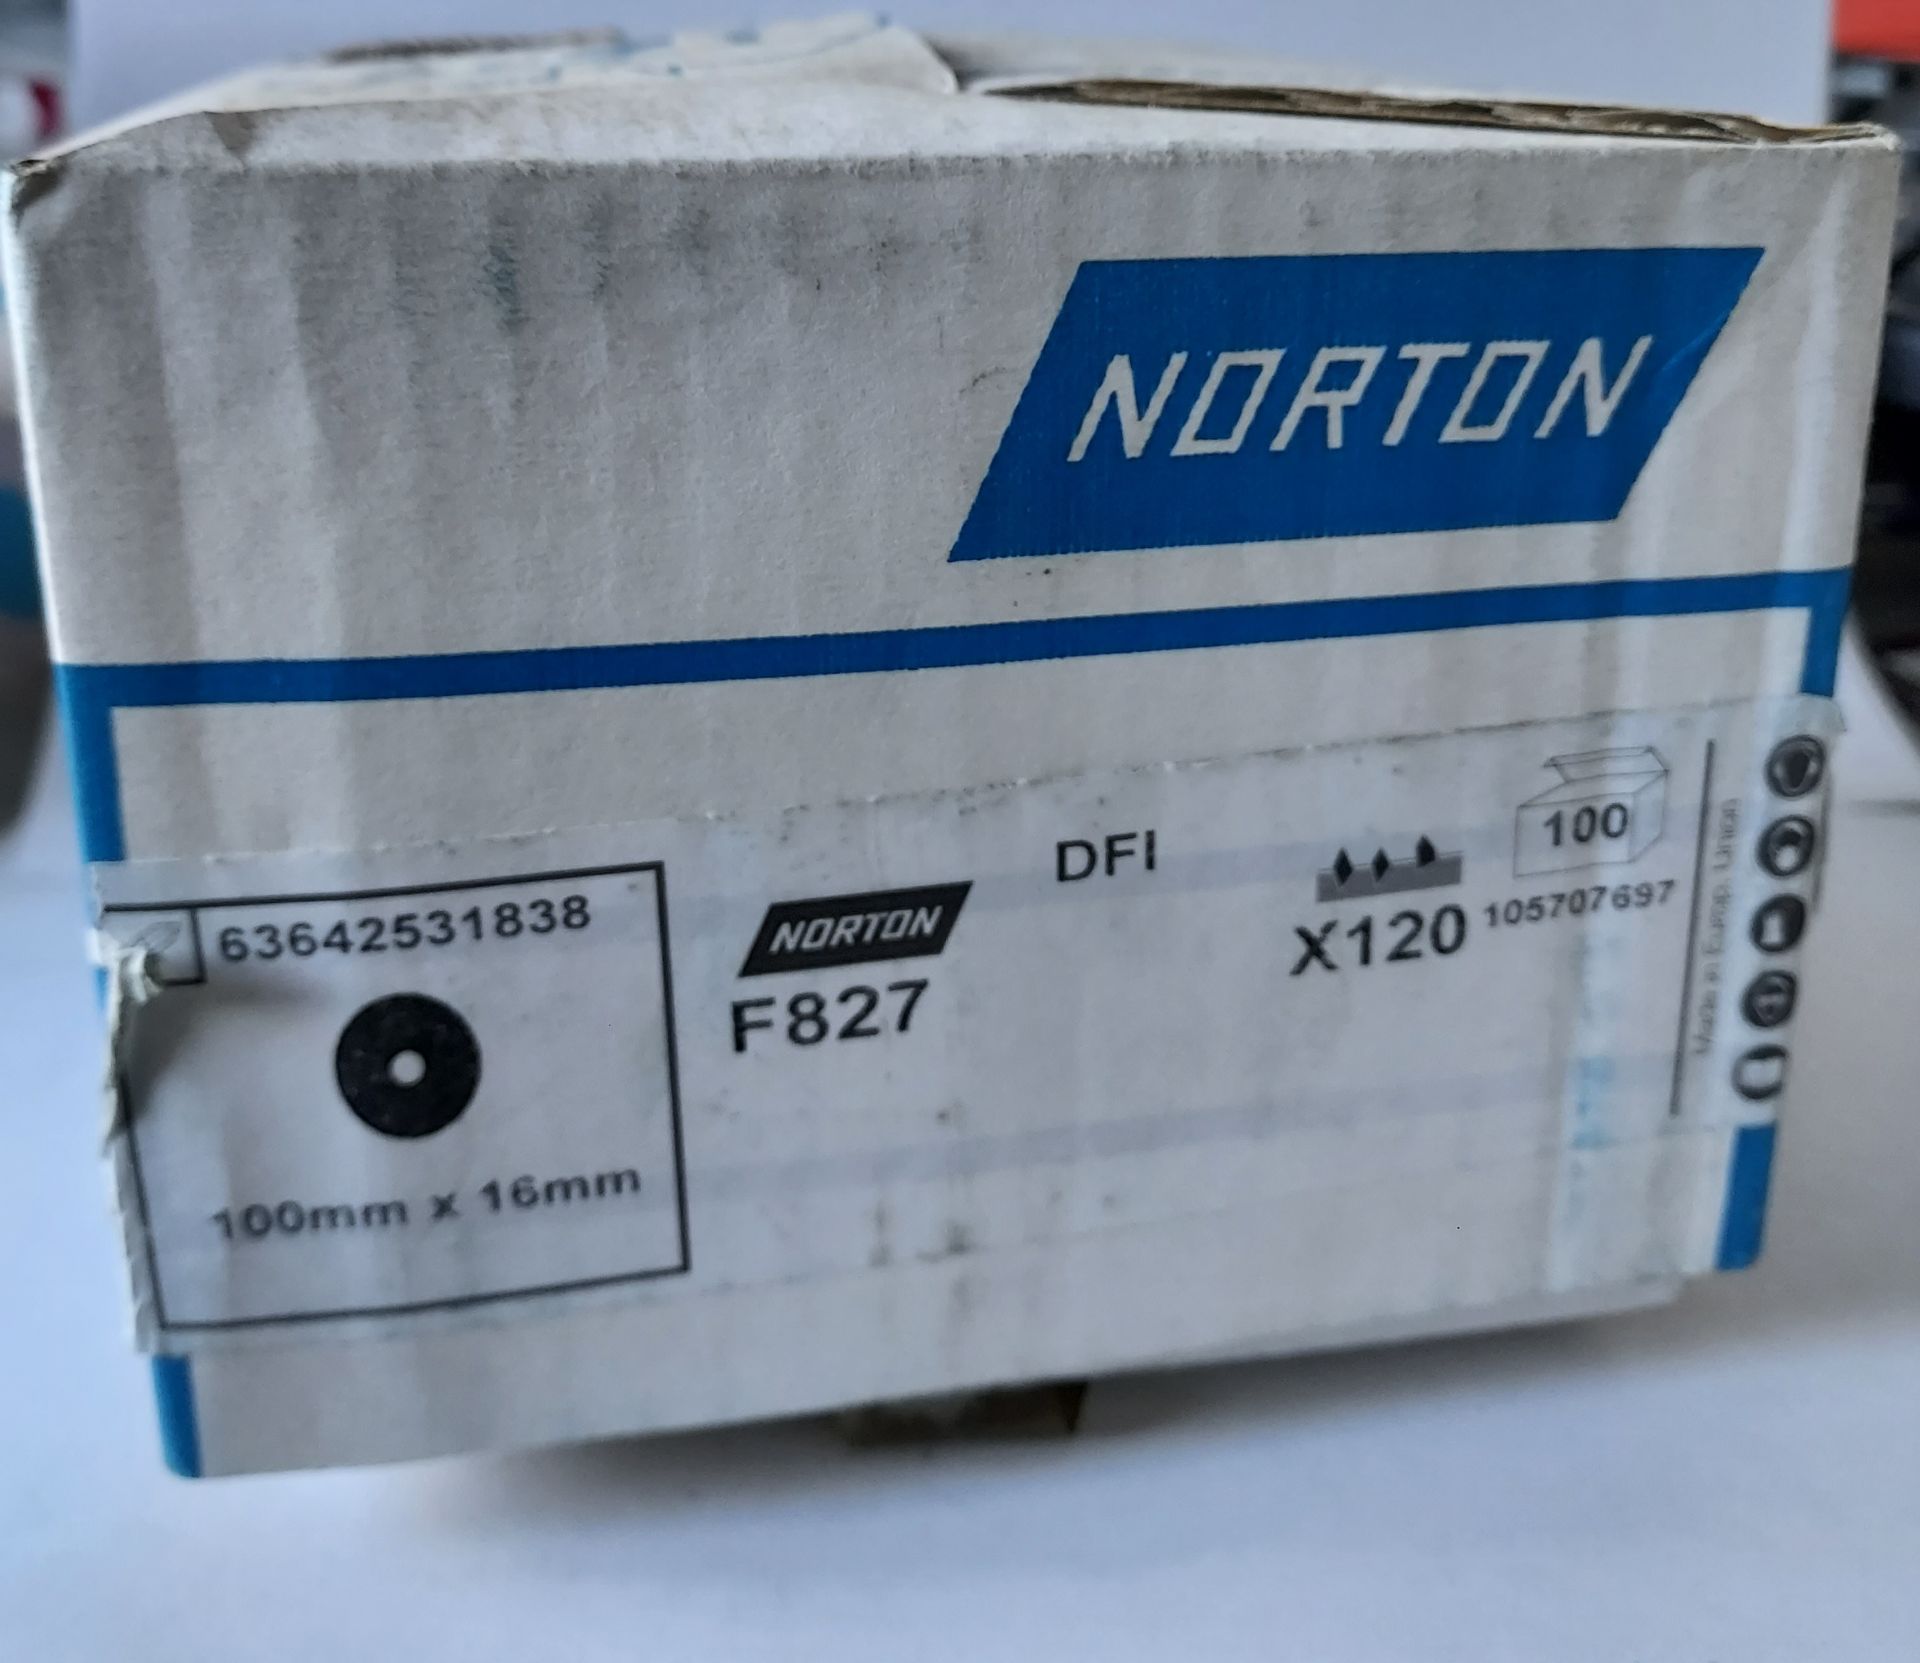 29 x BOX 100 NORTON F827 100 x 16 x 120 GRIT SANDING DISCS - Image 2 of 2